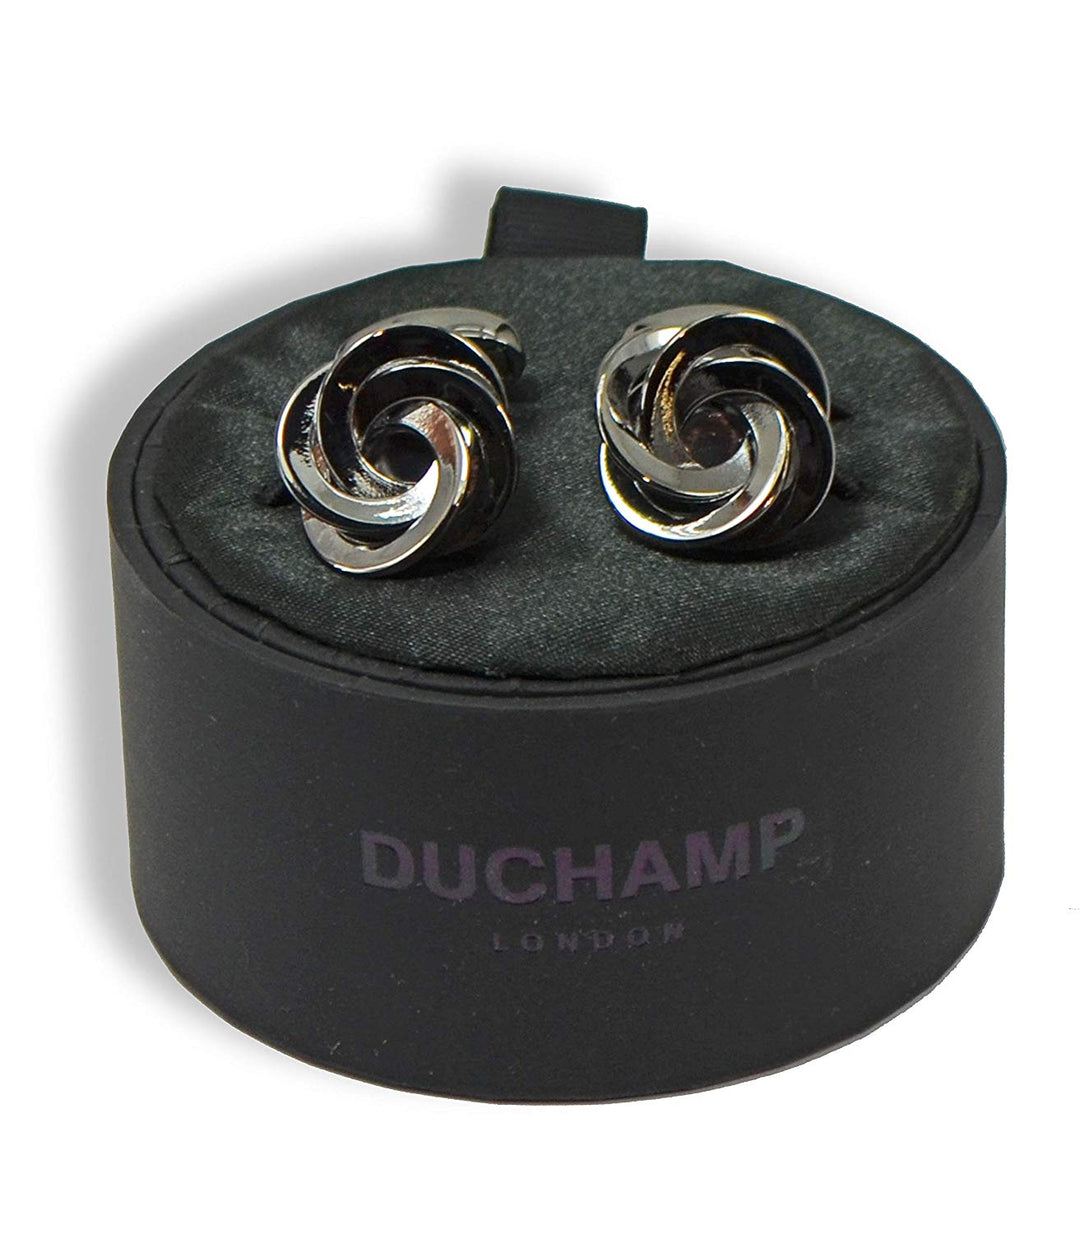 Duchamp London Knot Cuff Links